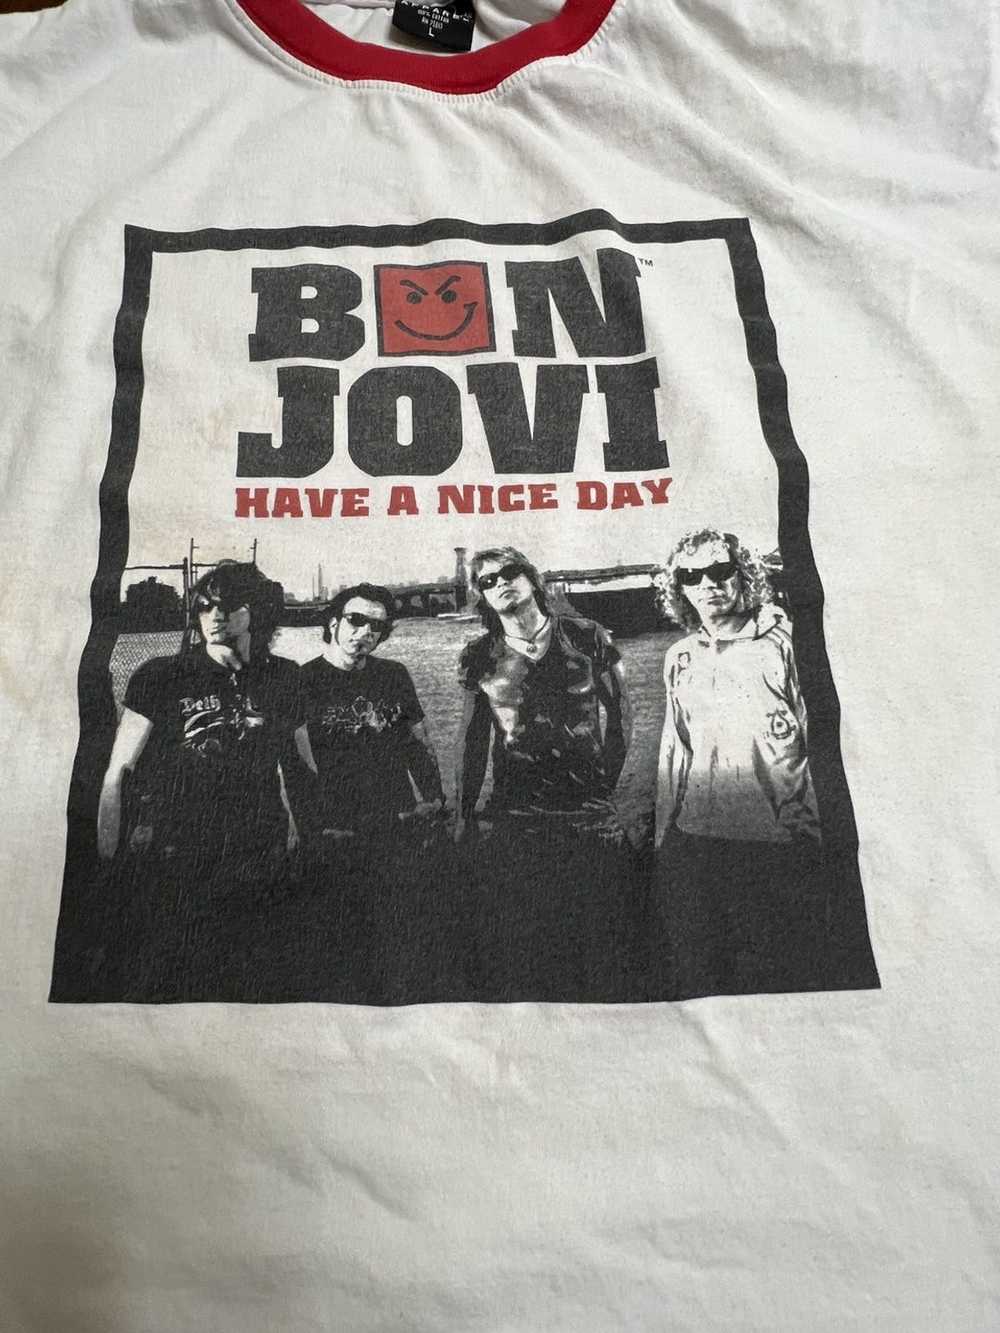 Vintage Bon Jovi have a nice day tour shirt 2005 - image 2